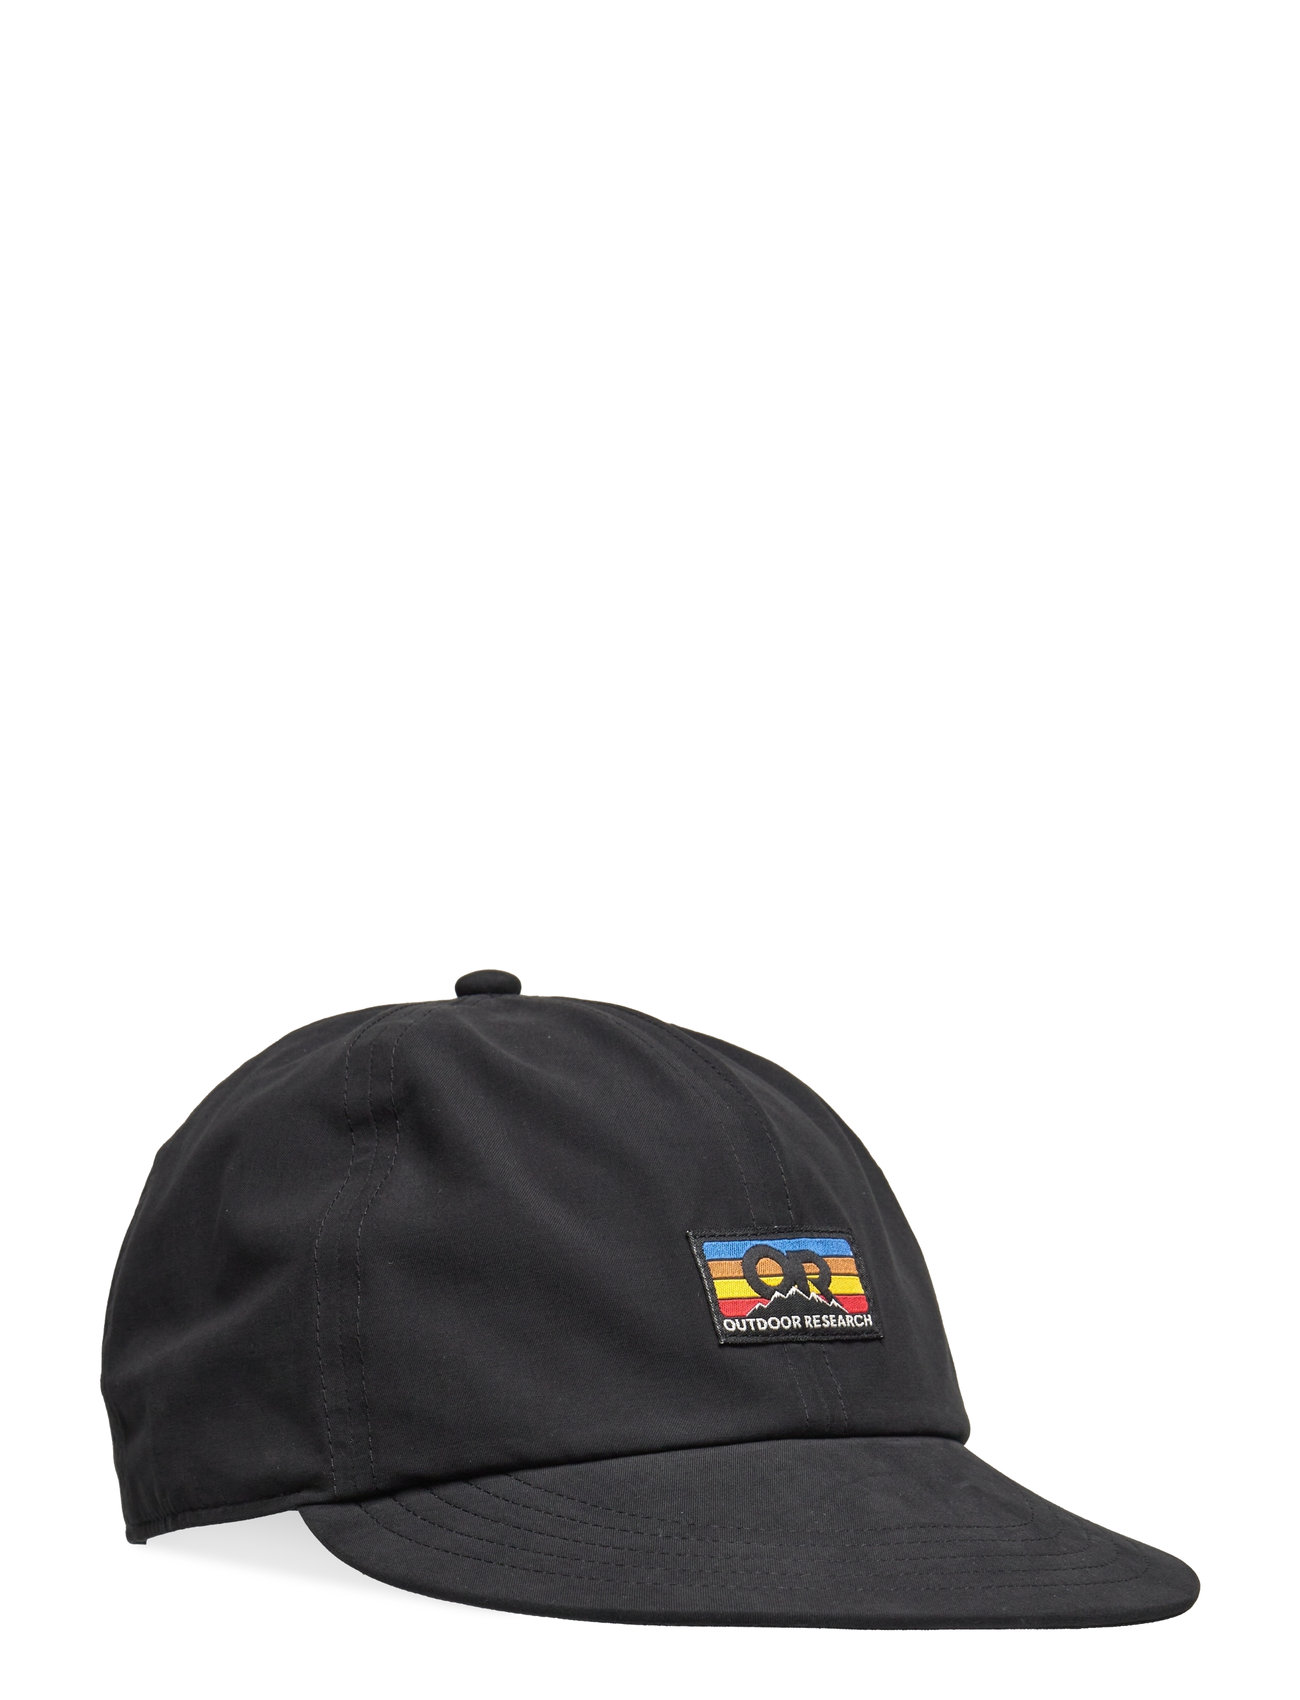 Advocat St Nylon Cap Accessories Headwear Caps Black Outdoor Research